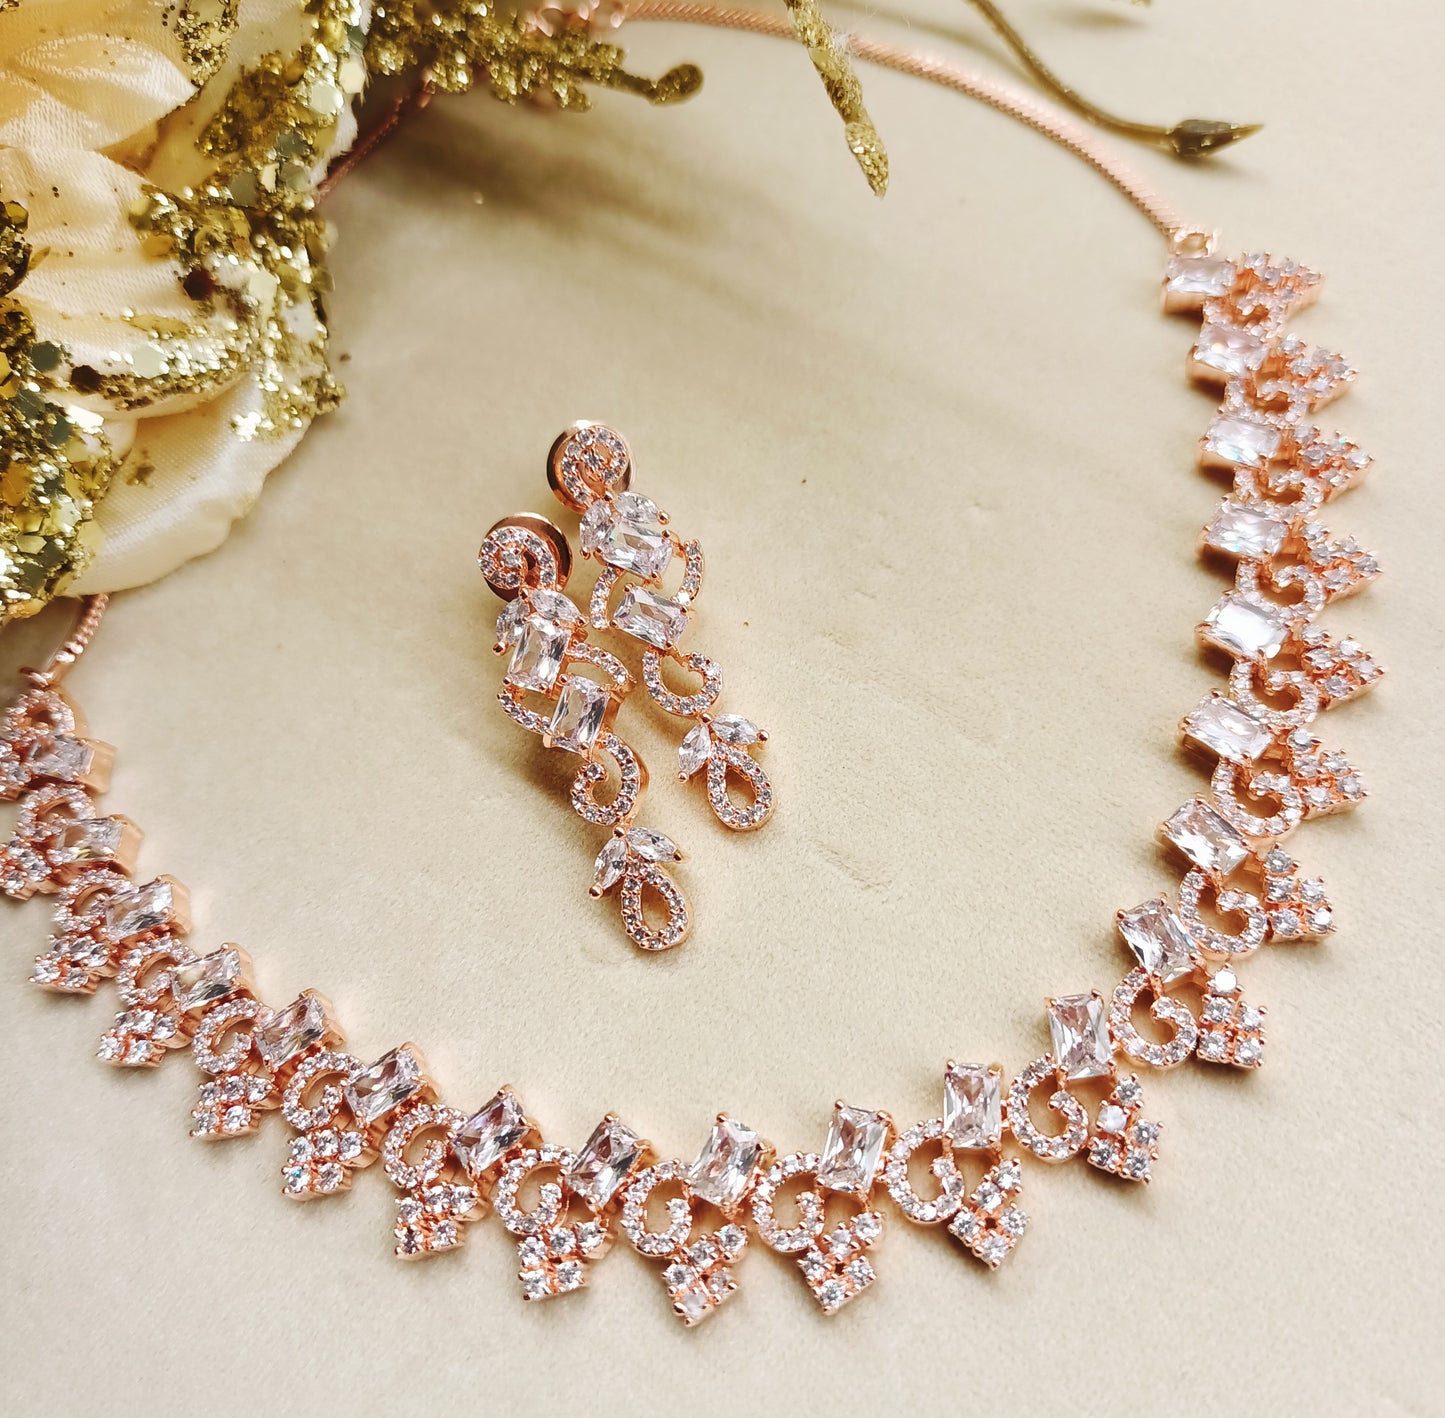 Hamidah American Diamond Necklace Set With Fancy Cut Shape